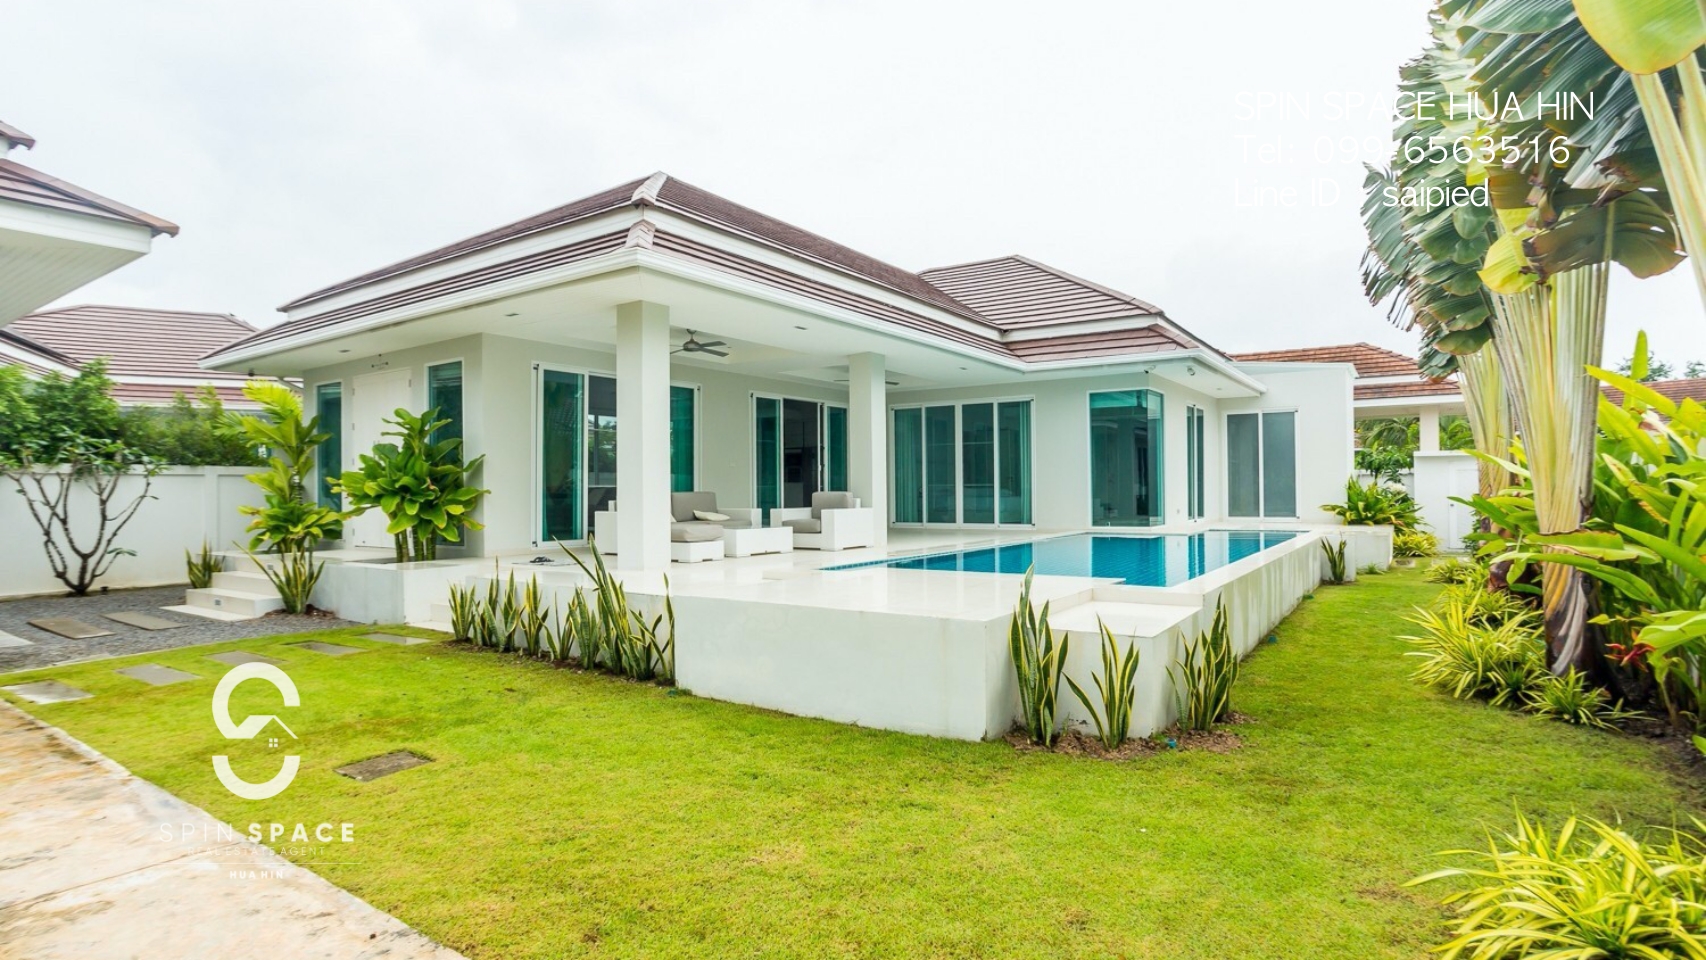 Spacious Luxury Villa With Garden In Hua Hin For Sale